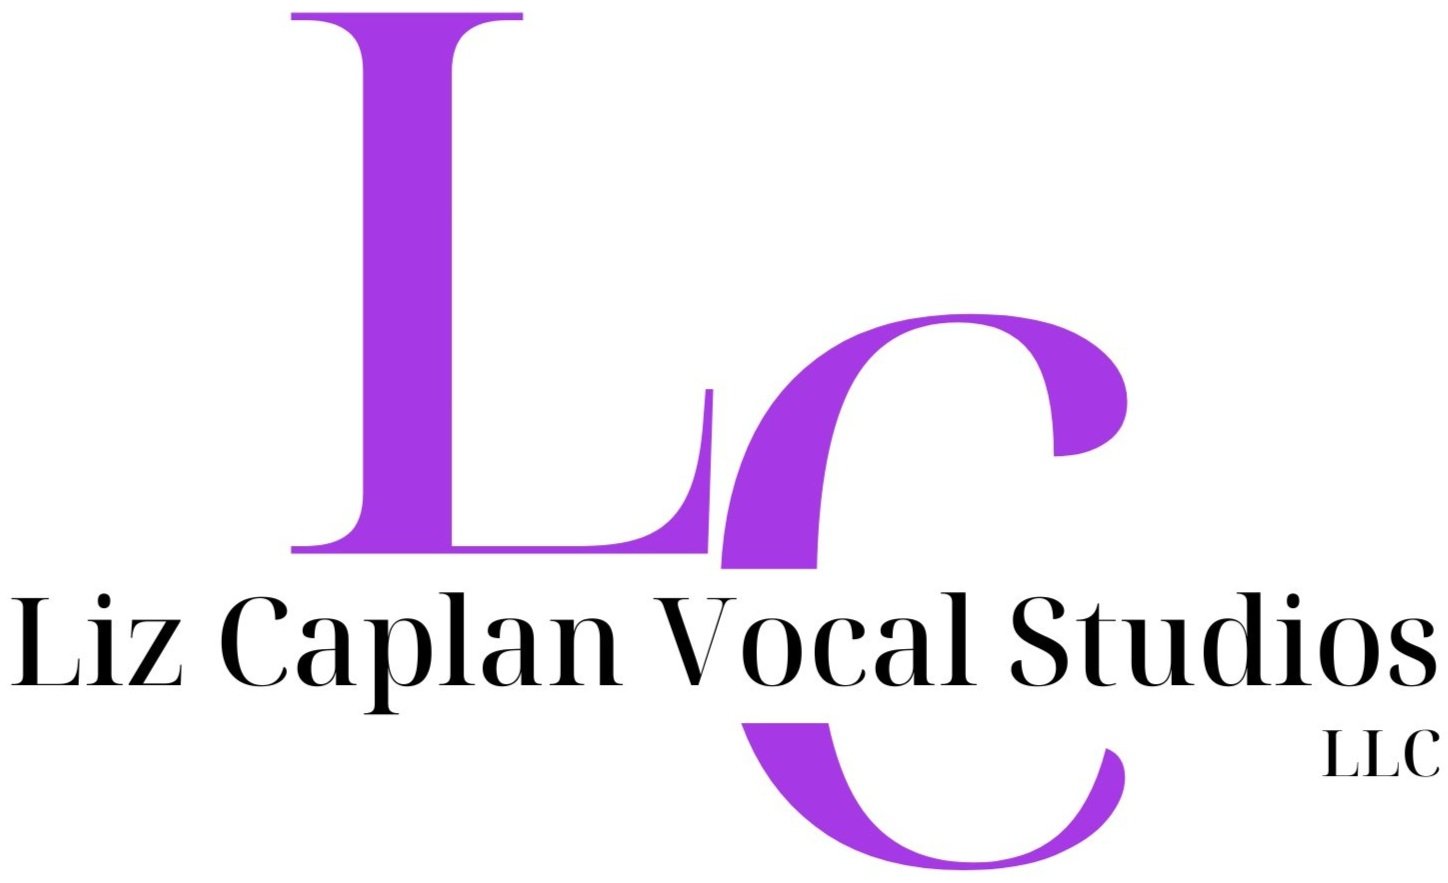 Liz Caplan Vocal Studios